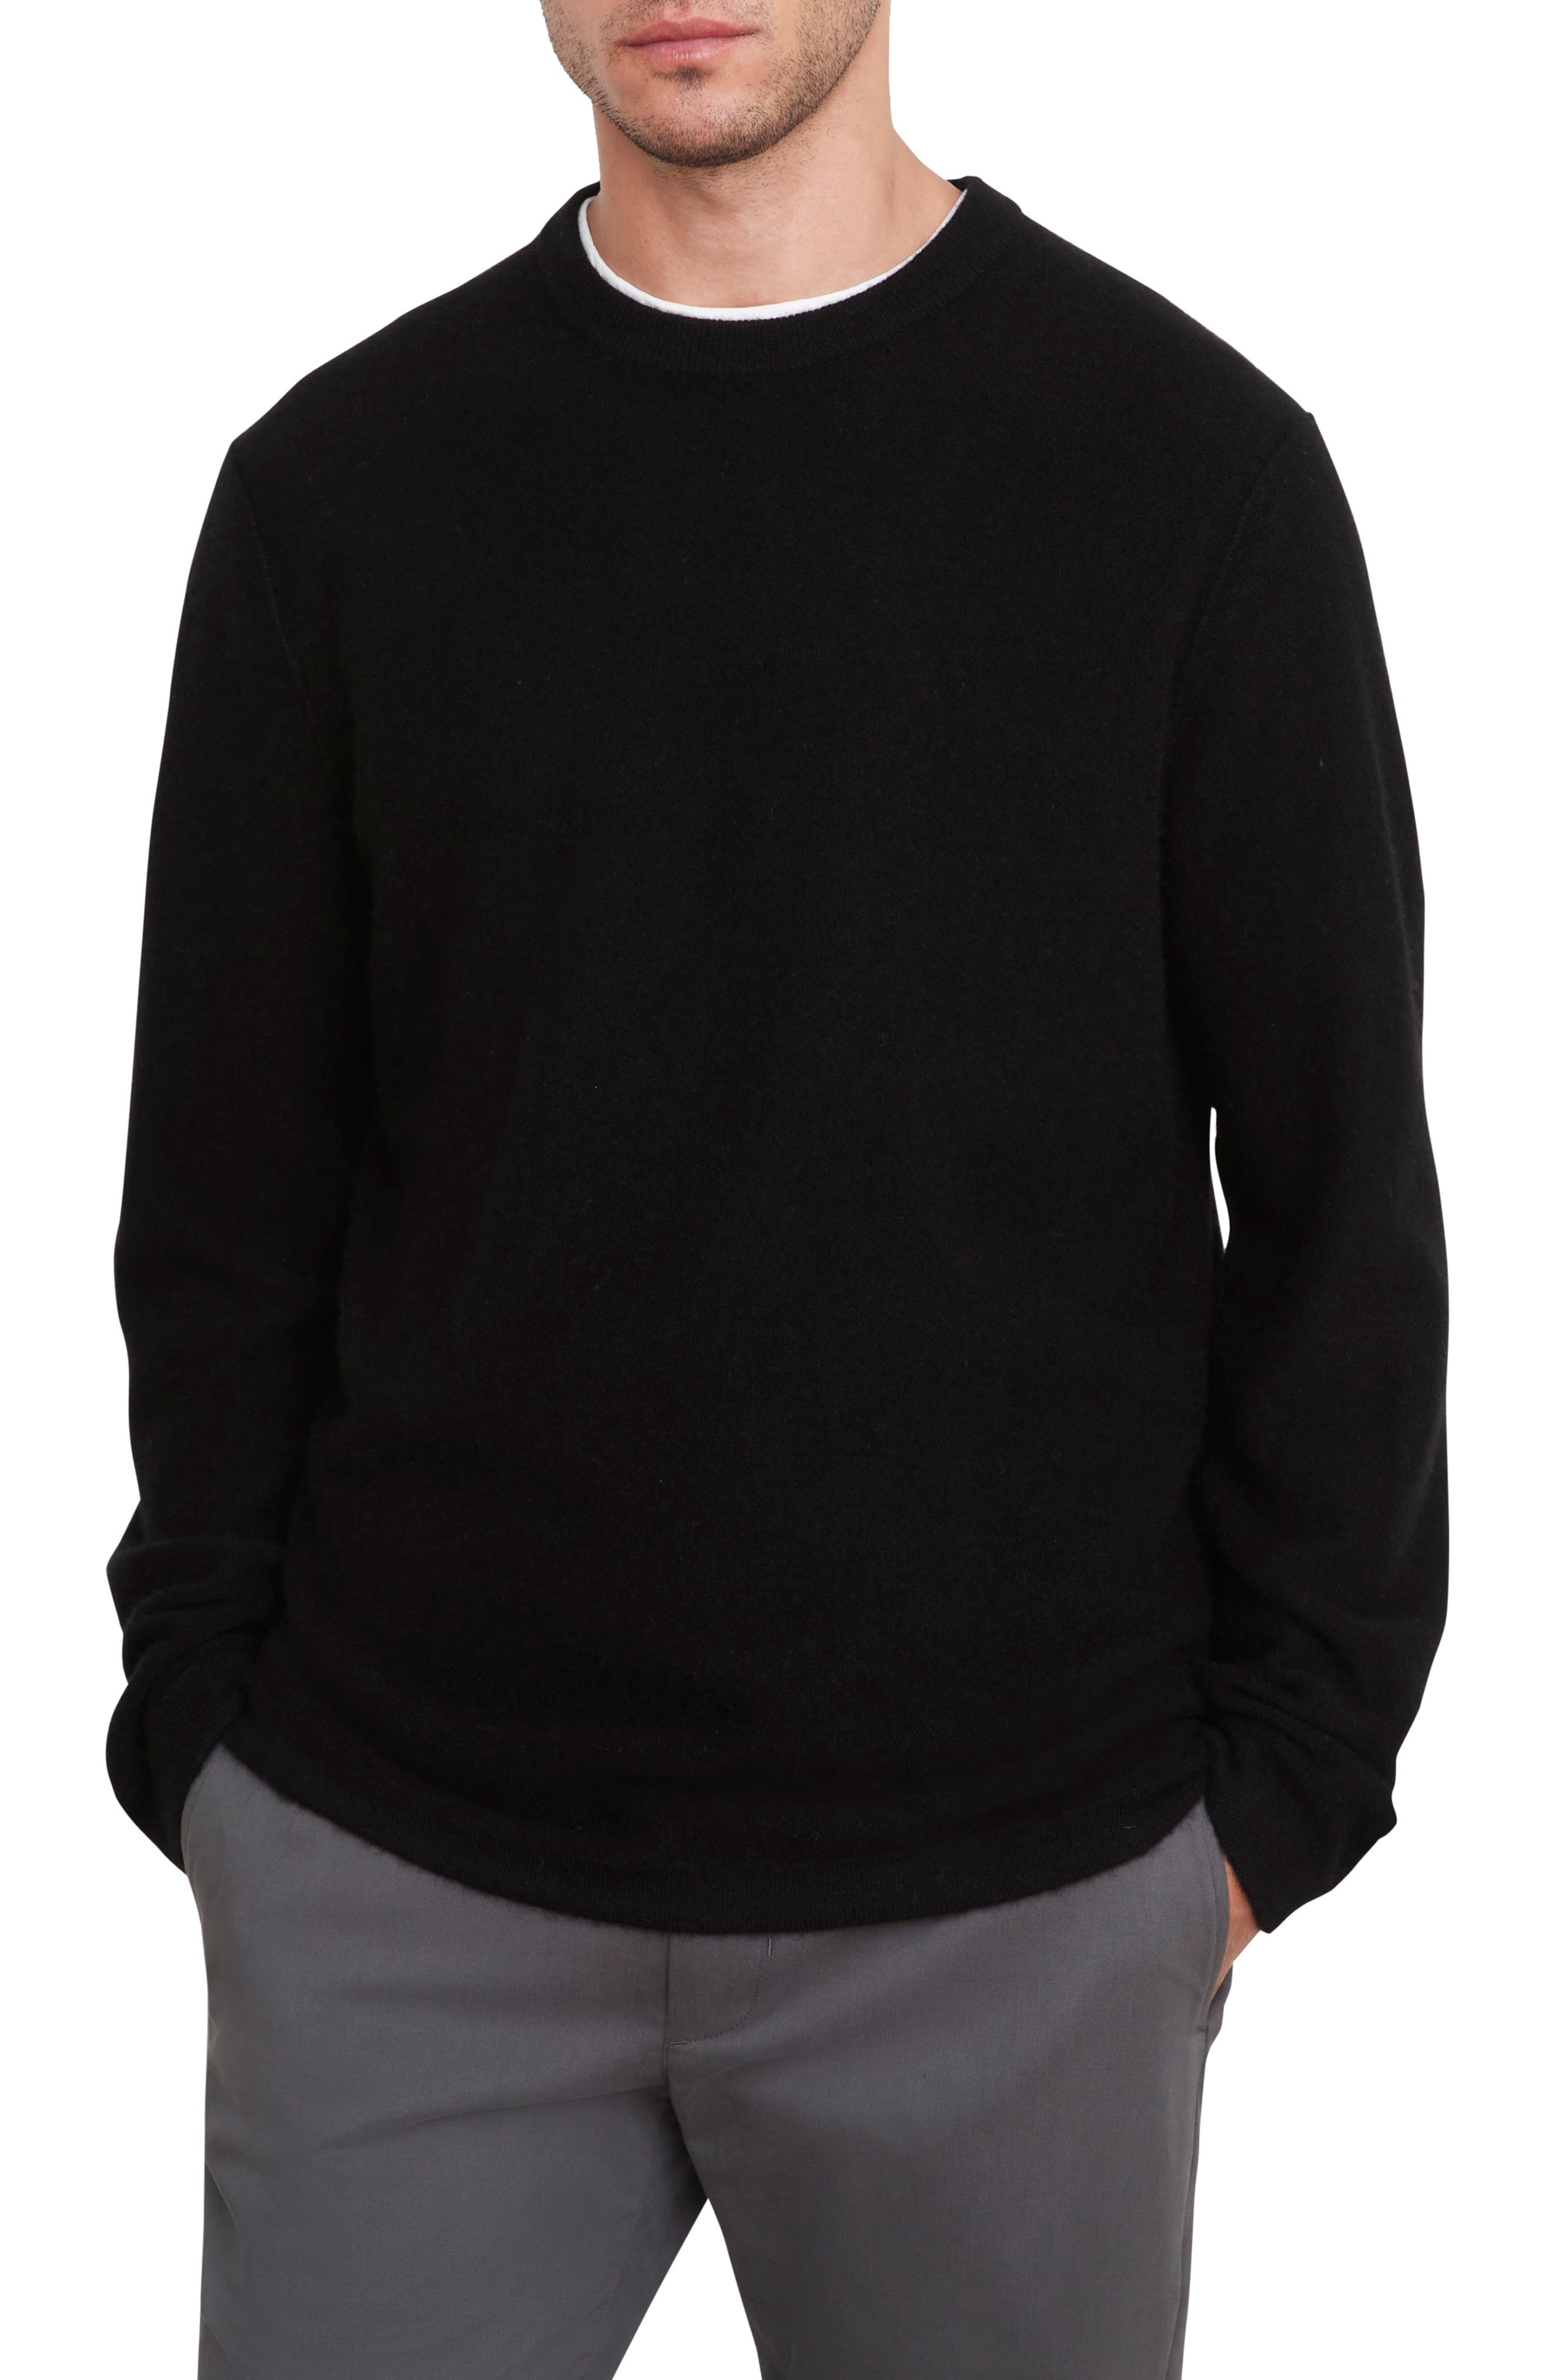 Men's Sweater cru neck in top cashmere 100% Clothing Gender-Neutral Adult Clothing Hoodies & Sweatshirts Sweatshirts 